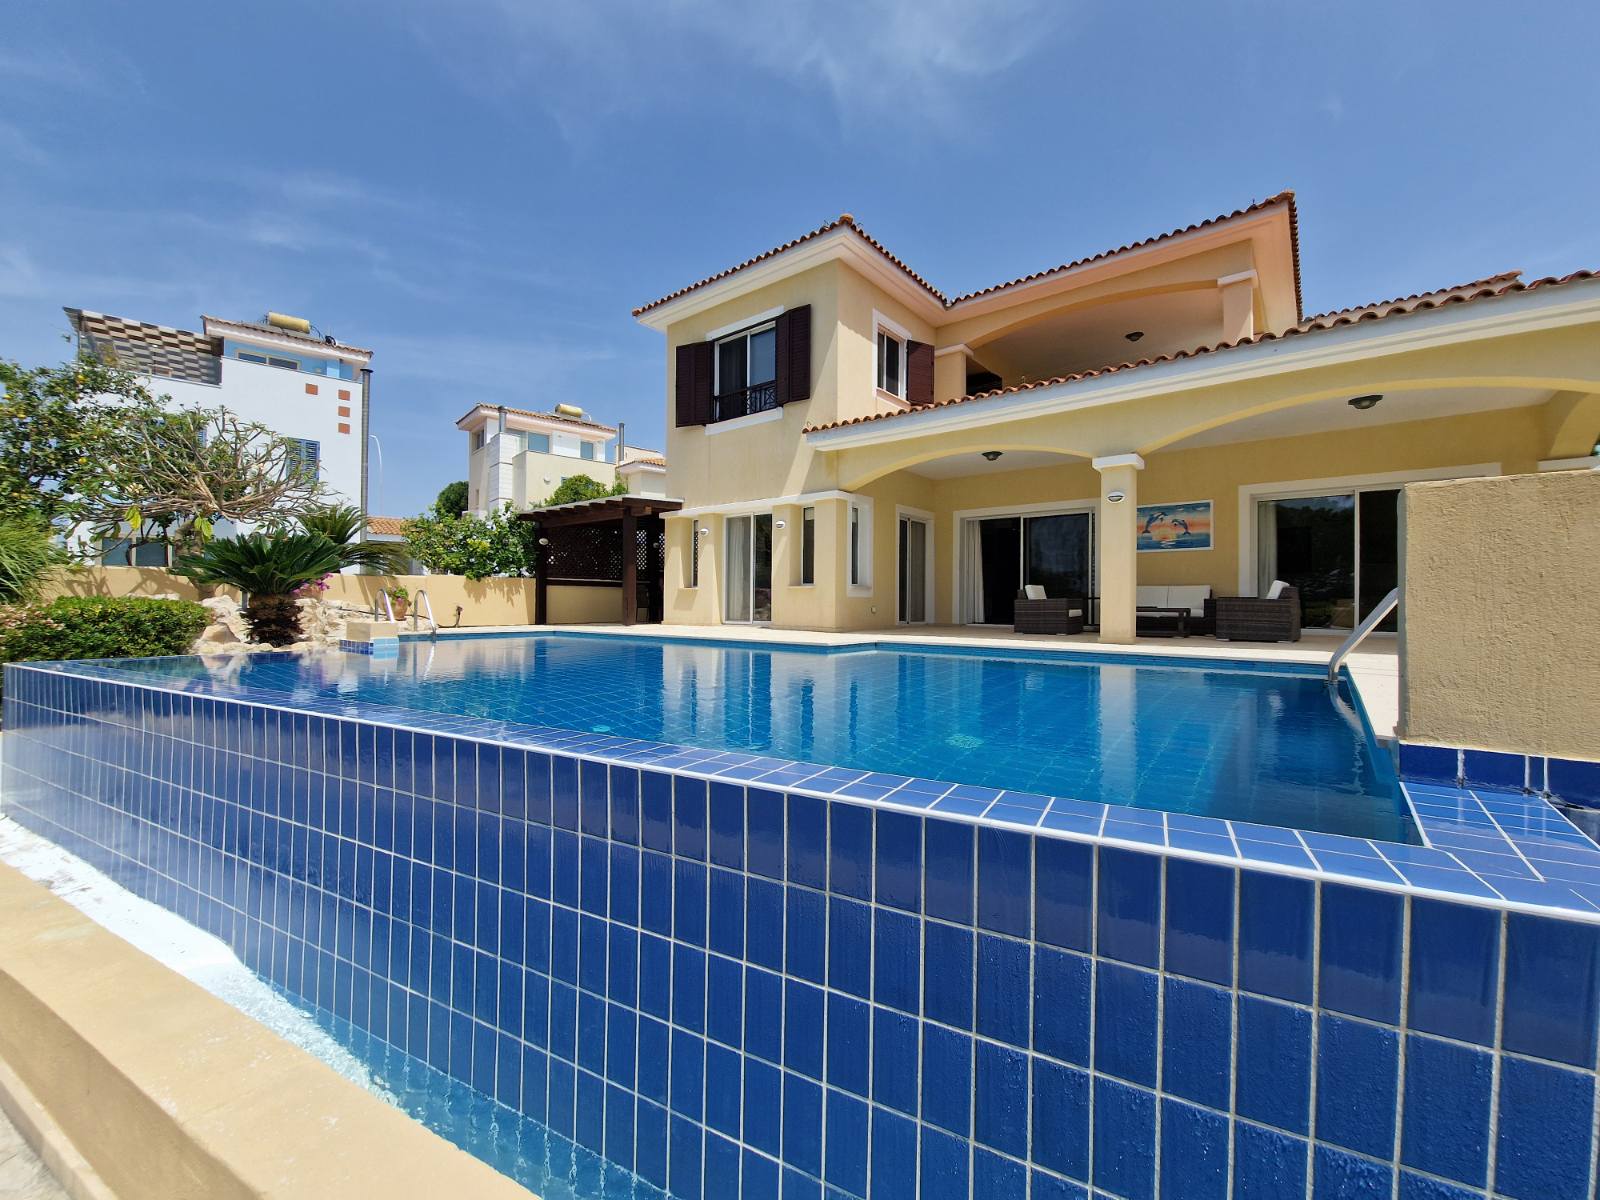 Five-bedroom luxury villa with swimming pool &#8211; Ref. SUN1508